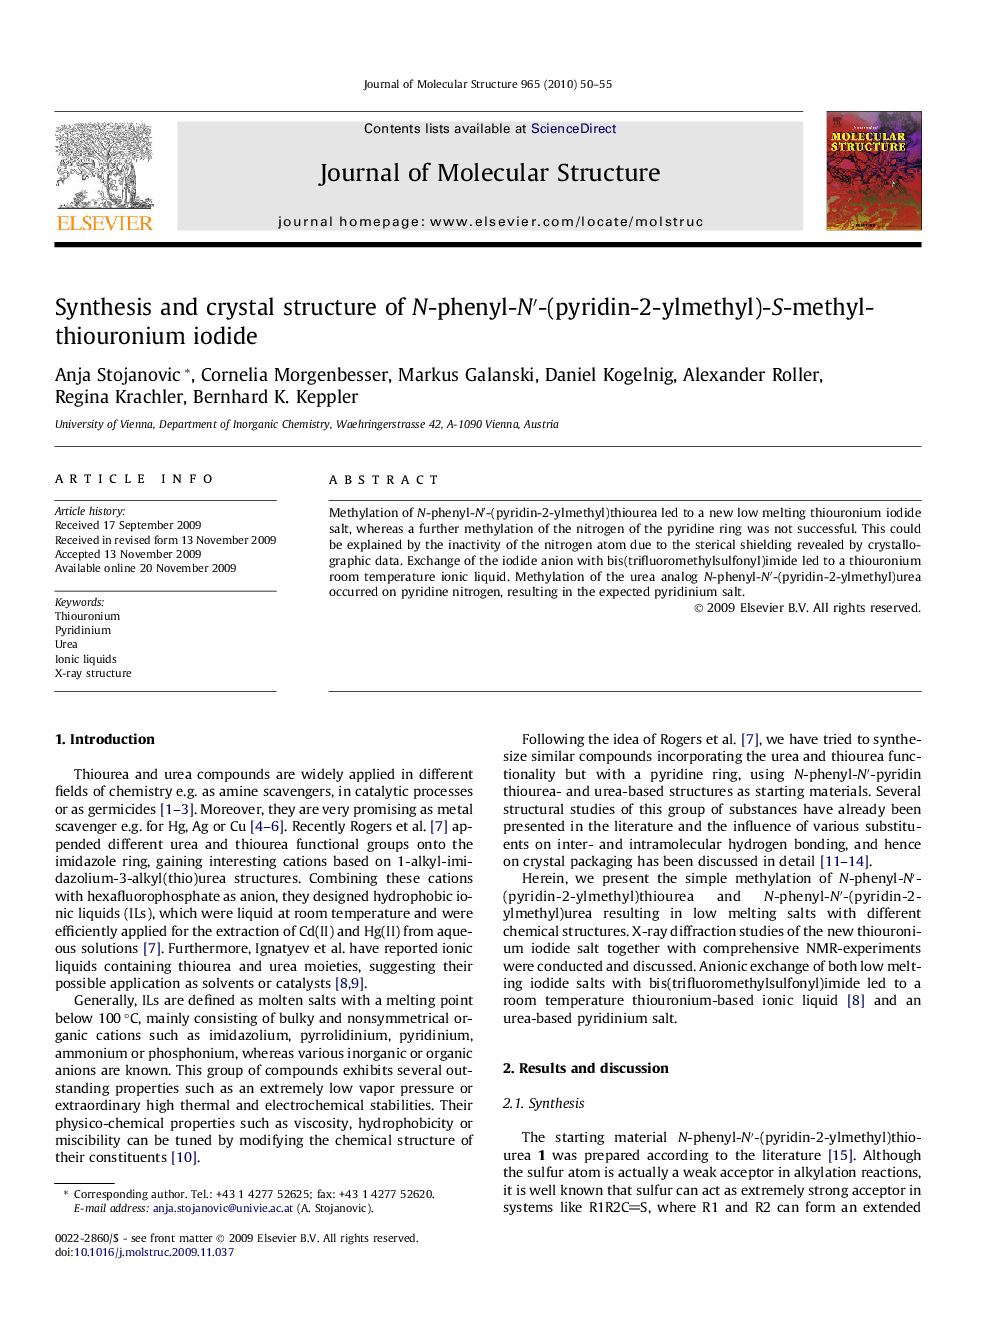 Synthesis and crystal structure of N-phenyl-N′-(pyridin-2-ylmethyl)-S-methyl-thiouronium iodide